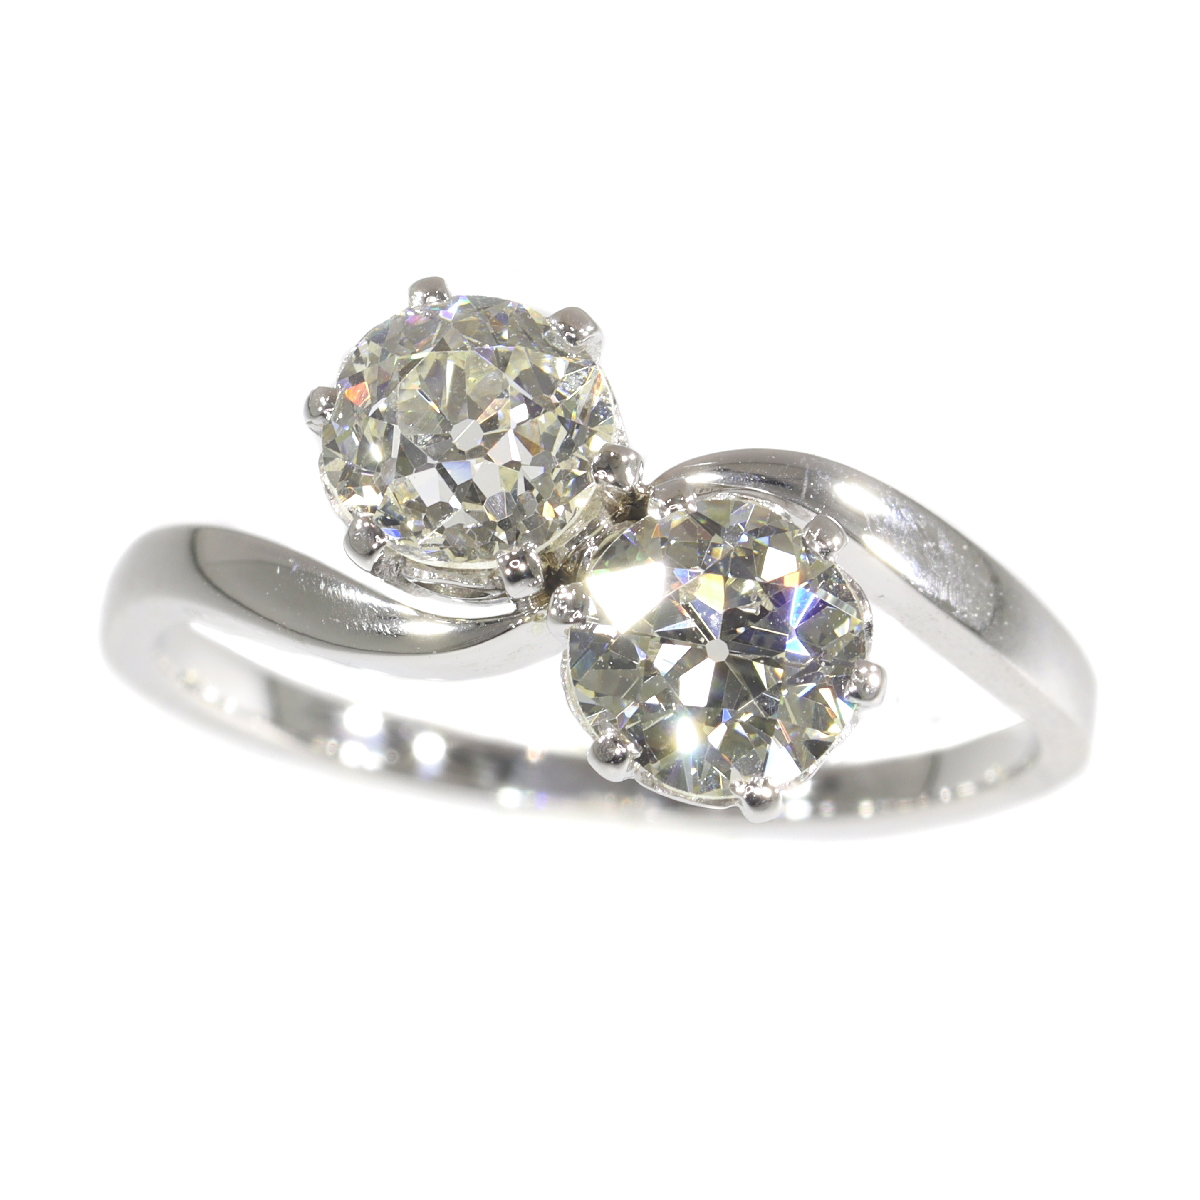 Capturing Vintage Love s Essence: Toi et Moi Ring with Vintage Diamonds